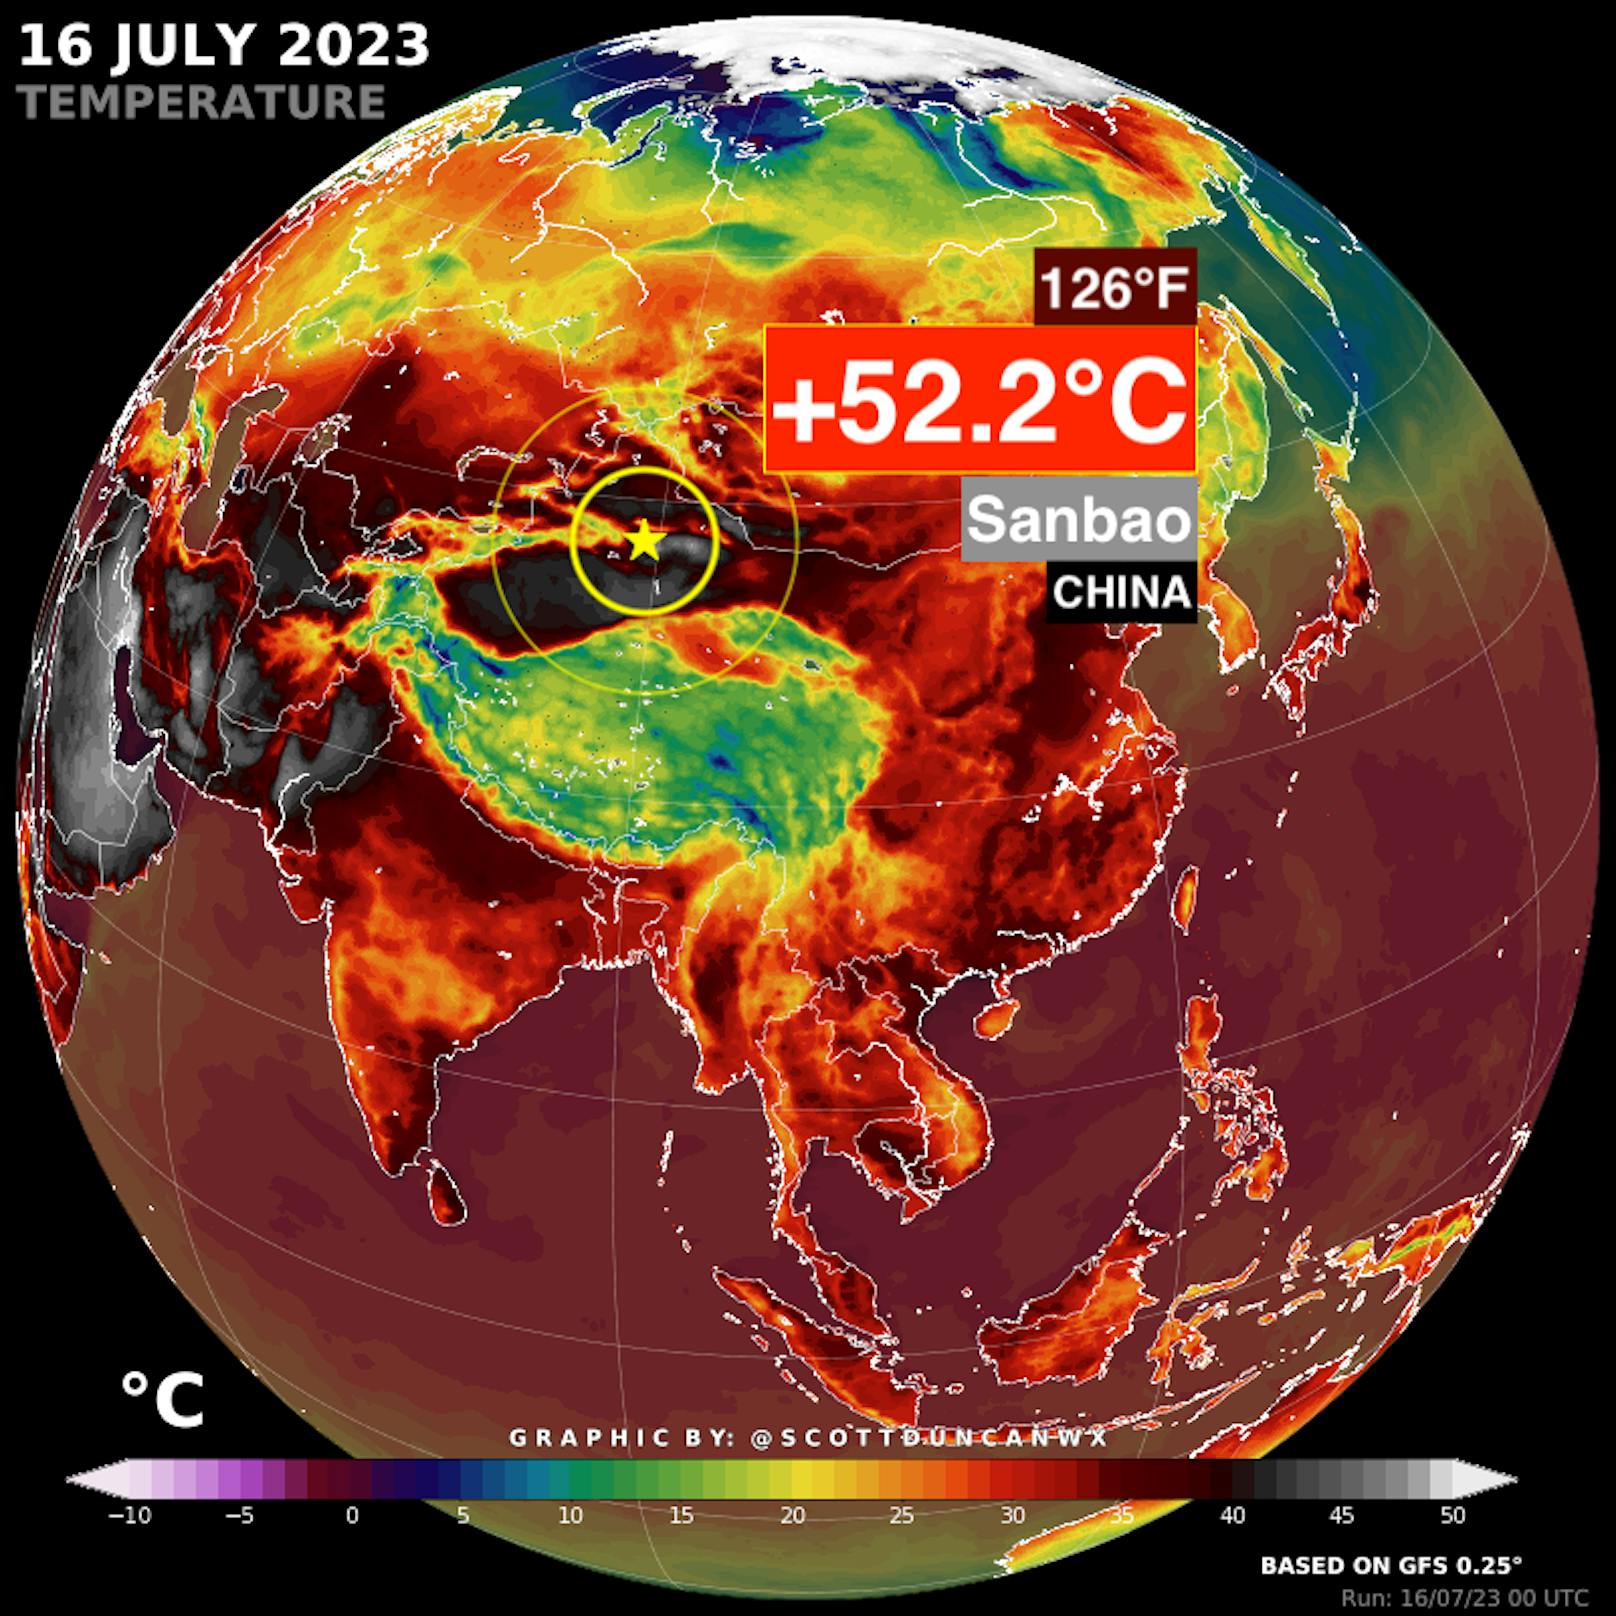 <strong>16. Juli 2023:</strong> <a target="_blank" data-li-document-ref="100282058" href="https://www.heute.at/g/522-grad-neuer-hitzerekord-in-china-gemessen-100282058">52,2 Grad in Sanbaoxiang</a> im Nordwesten Chinas.